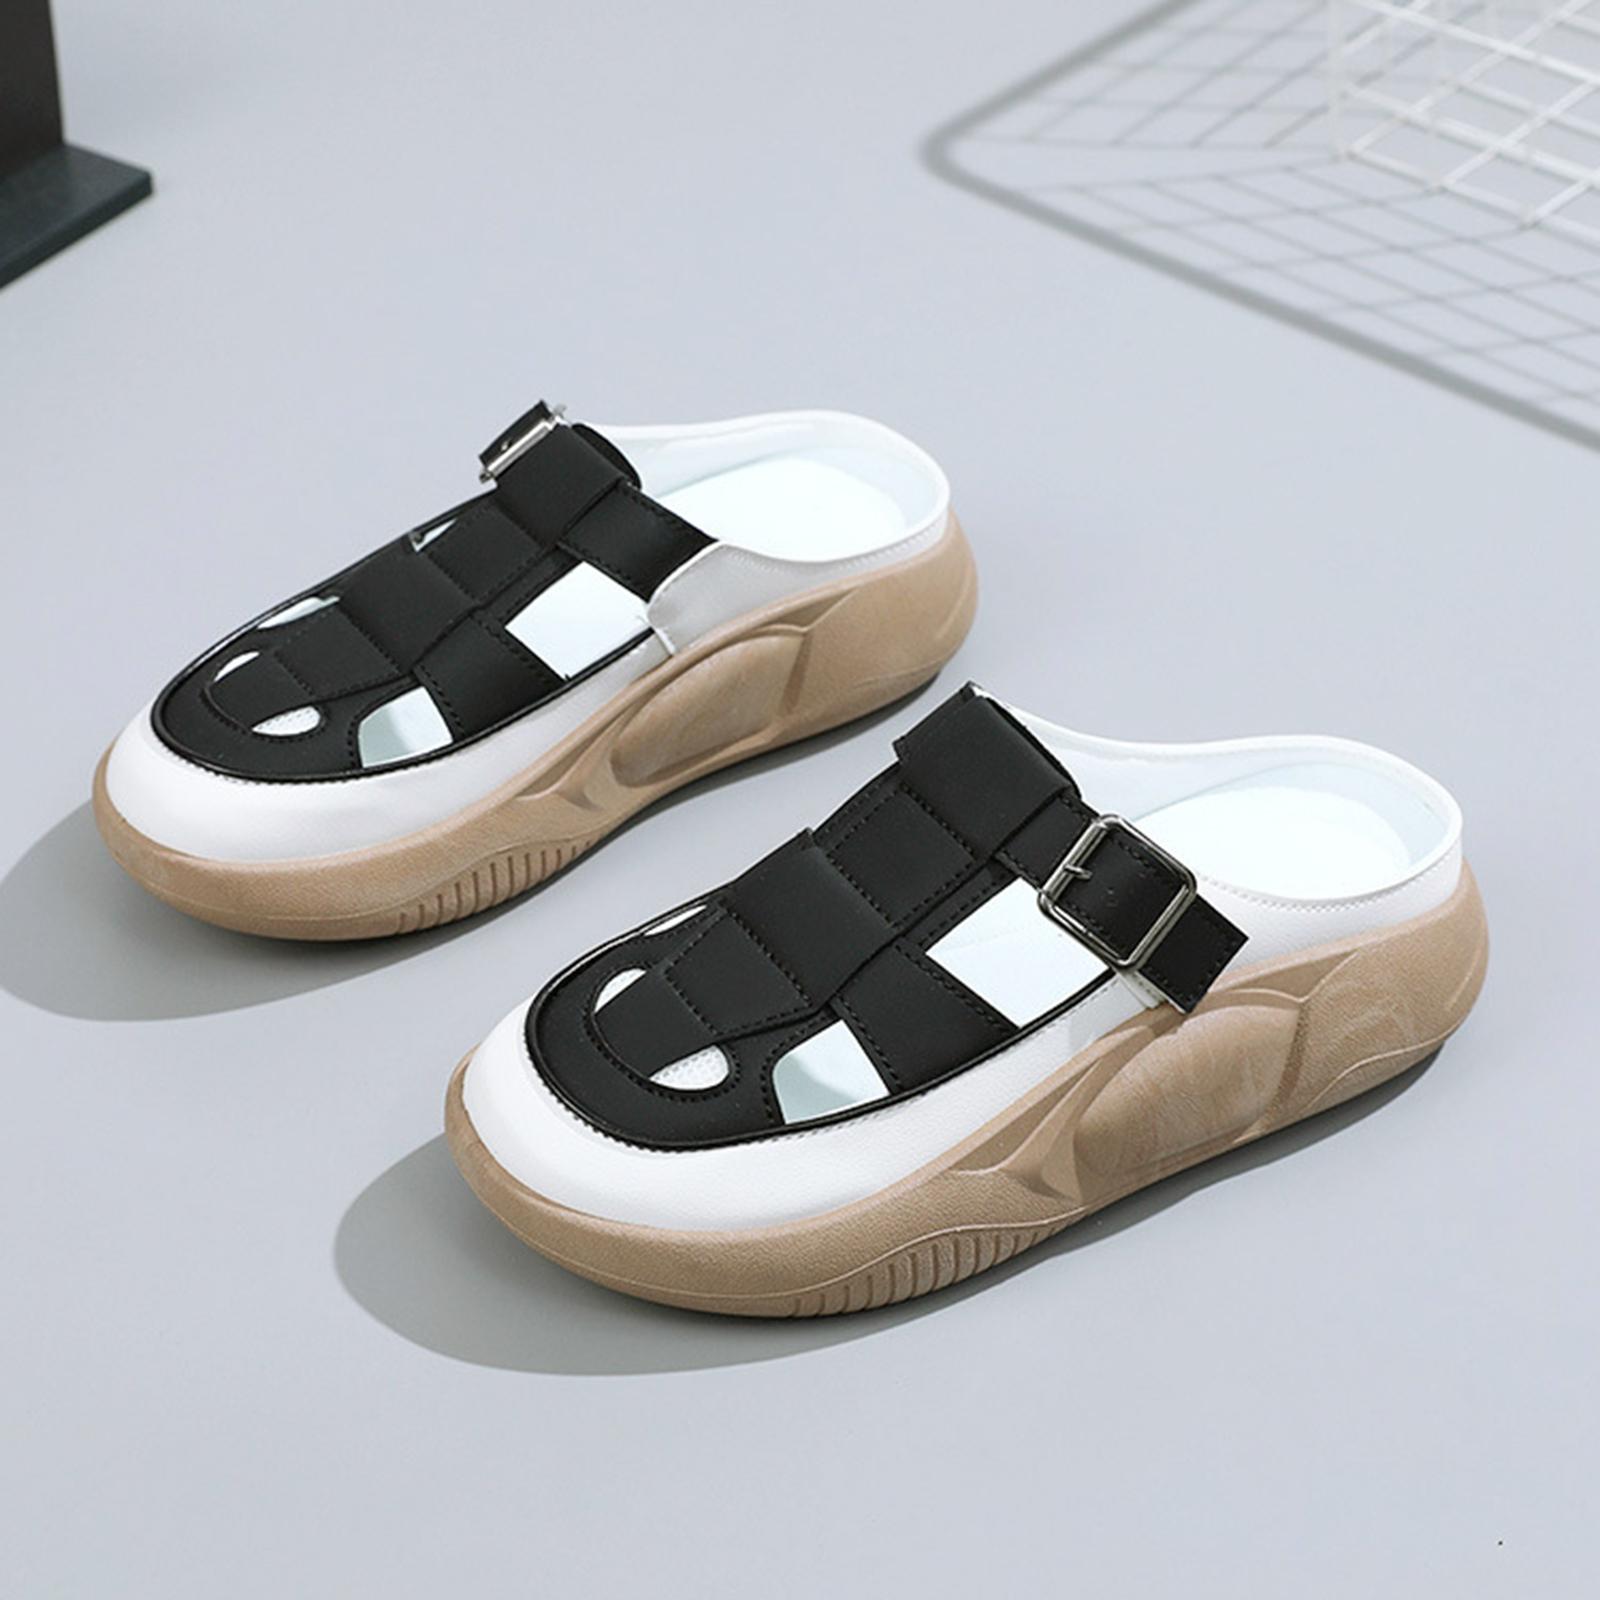 Women's Slide Sandals Comfortable Flat Shoes 5cm Thick Sole Nonslip Slippers Black 39